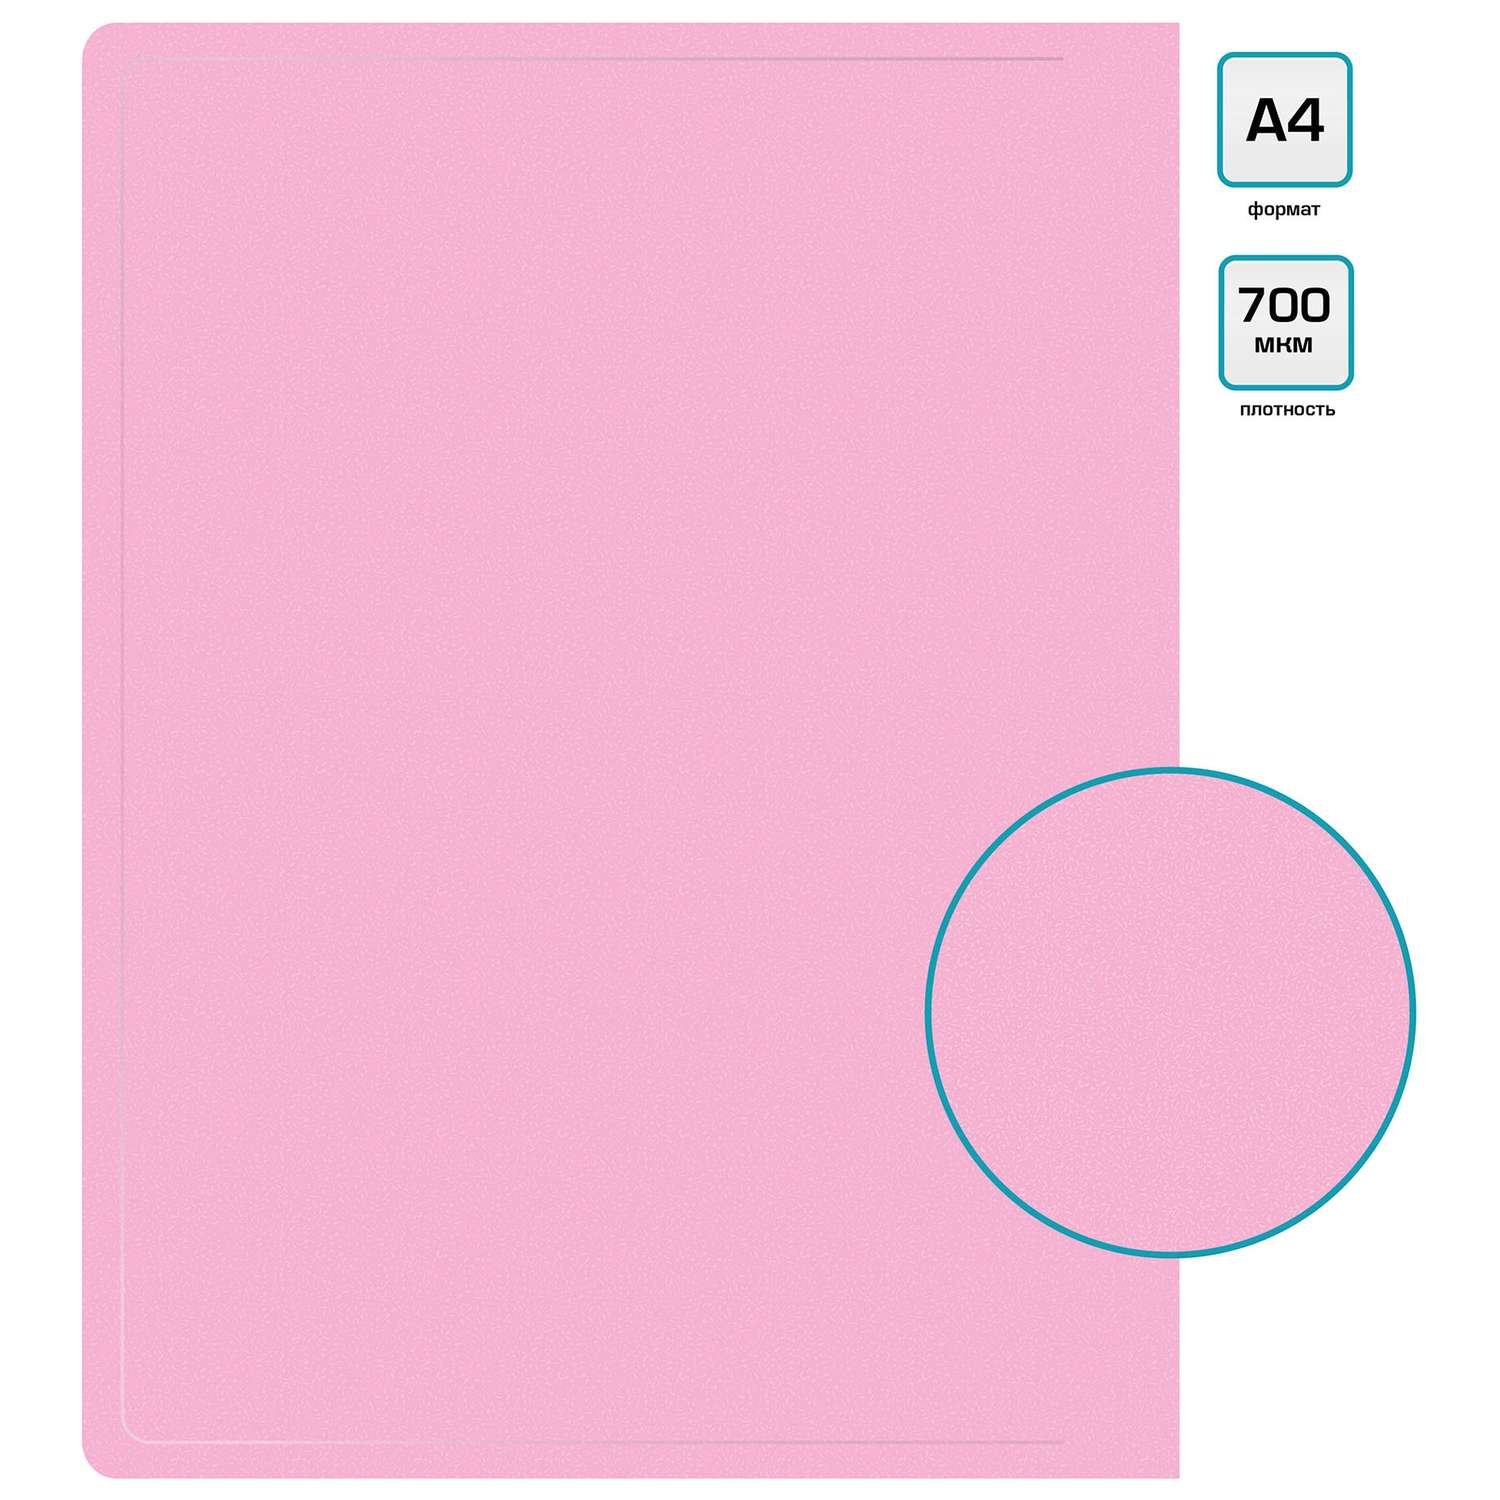 Папка-портфолио Бюрократ 40шт вкладышей A4 пластик 0.7мм розовый аметист - фото 2